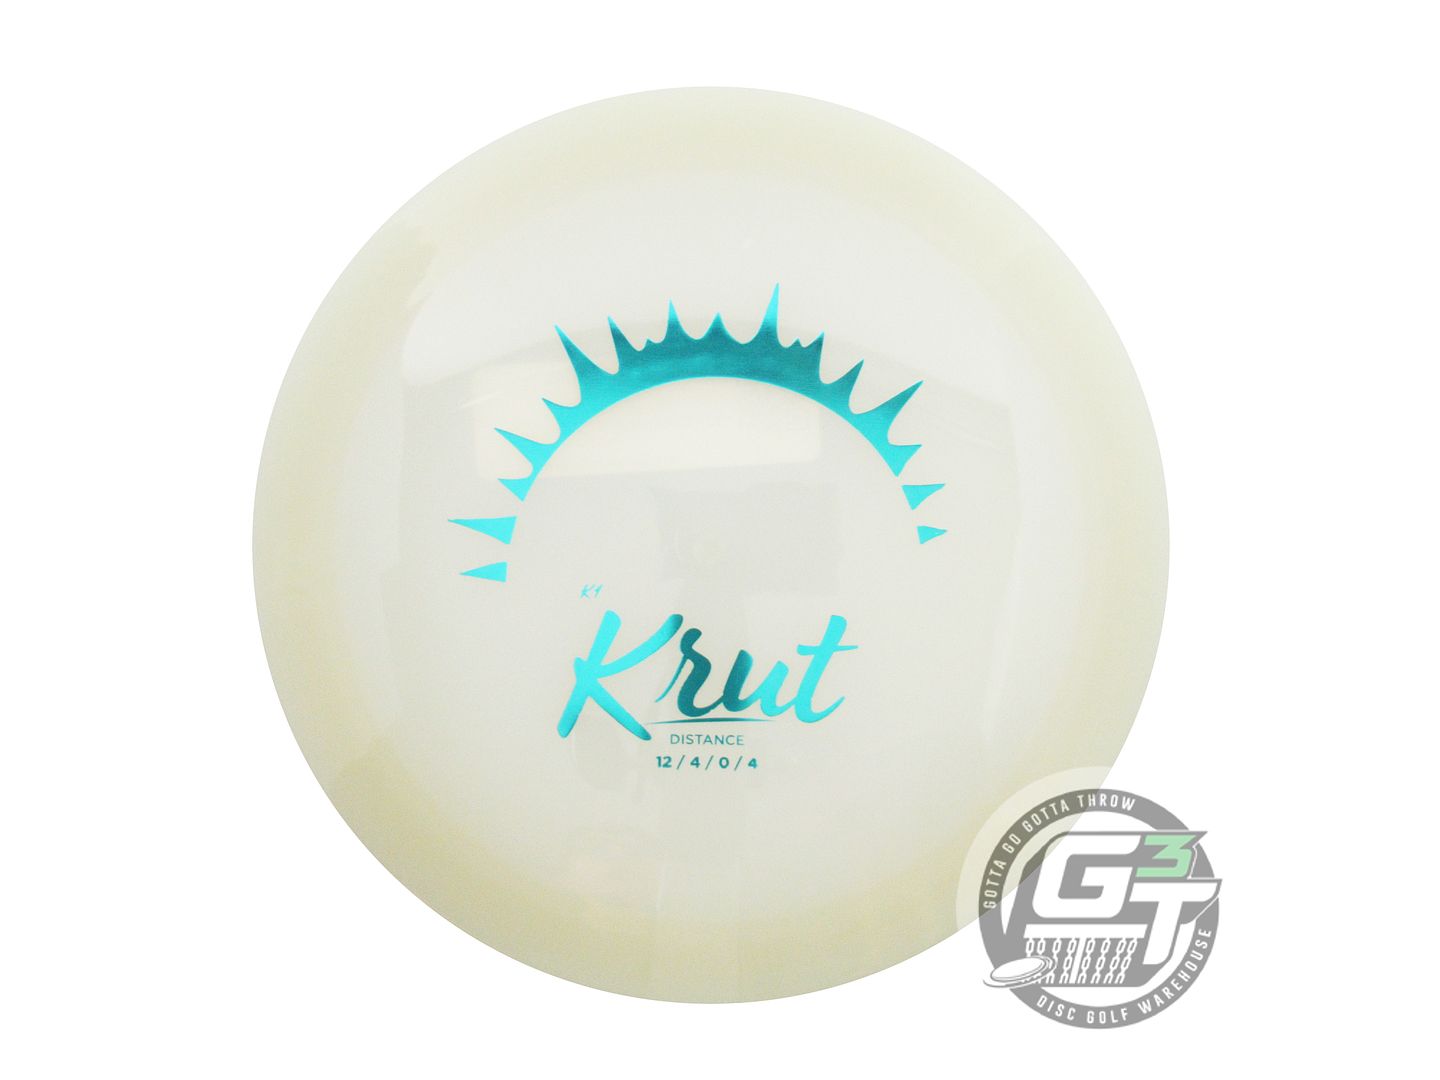 Kastaplast Glow K1 Krut Distance Driver Golf Disc (Individually Listed)